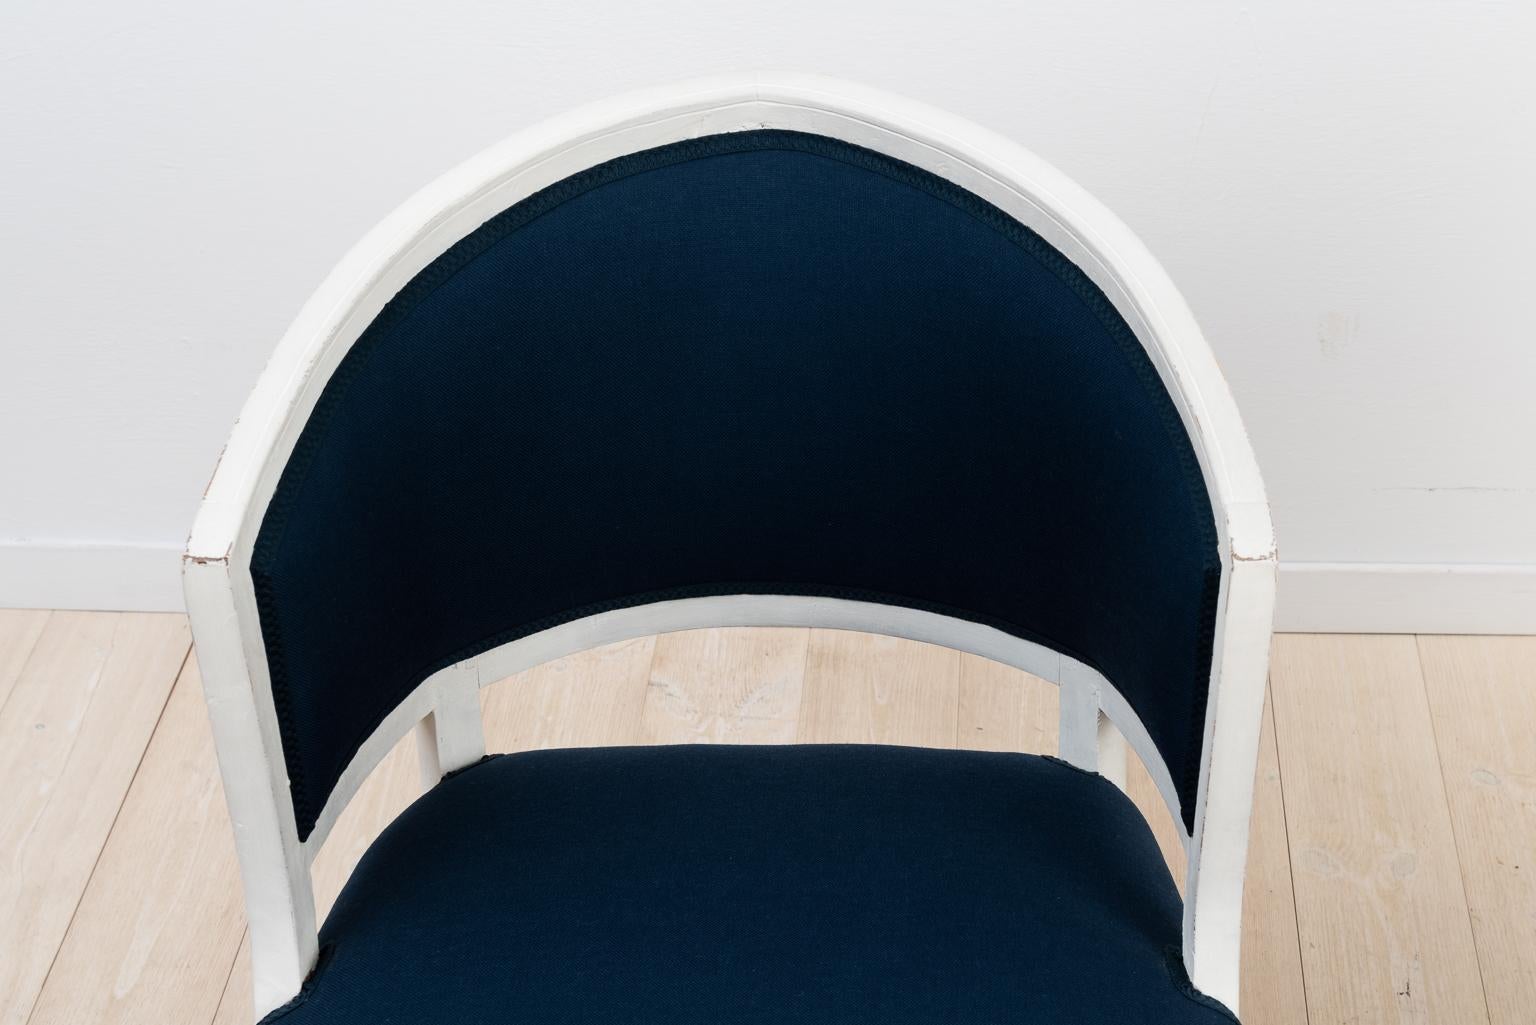 Pine Antique Swedish Gustavian Upholstered Barrel Back Chairs For Sale